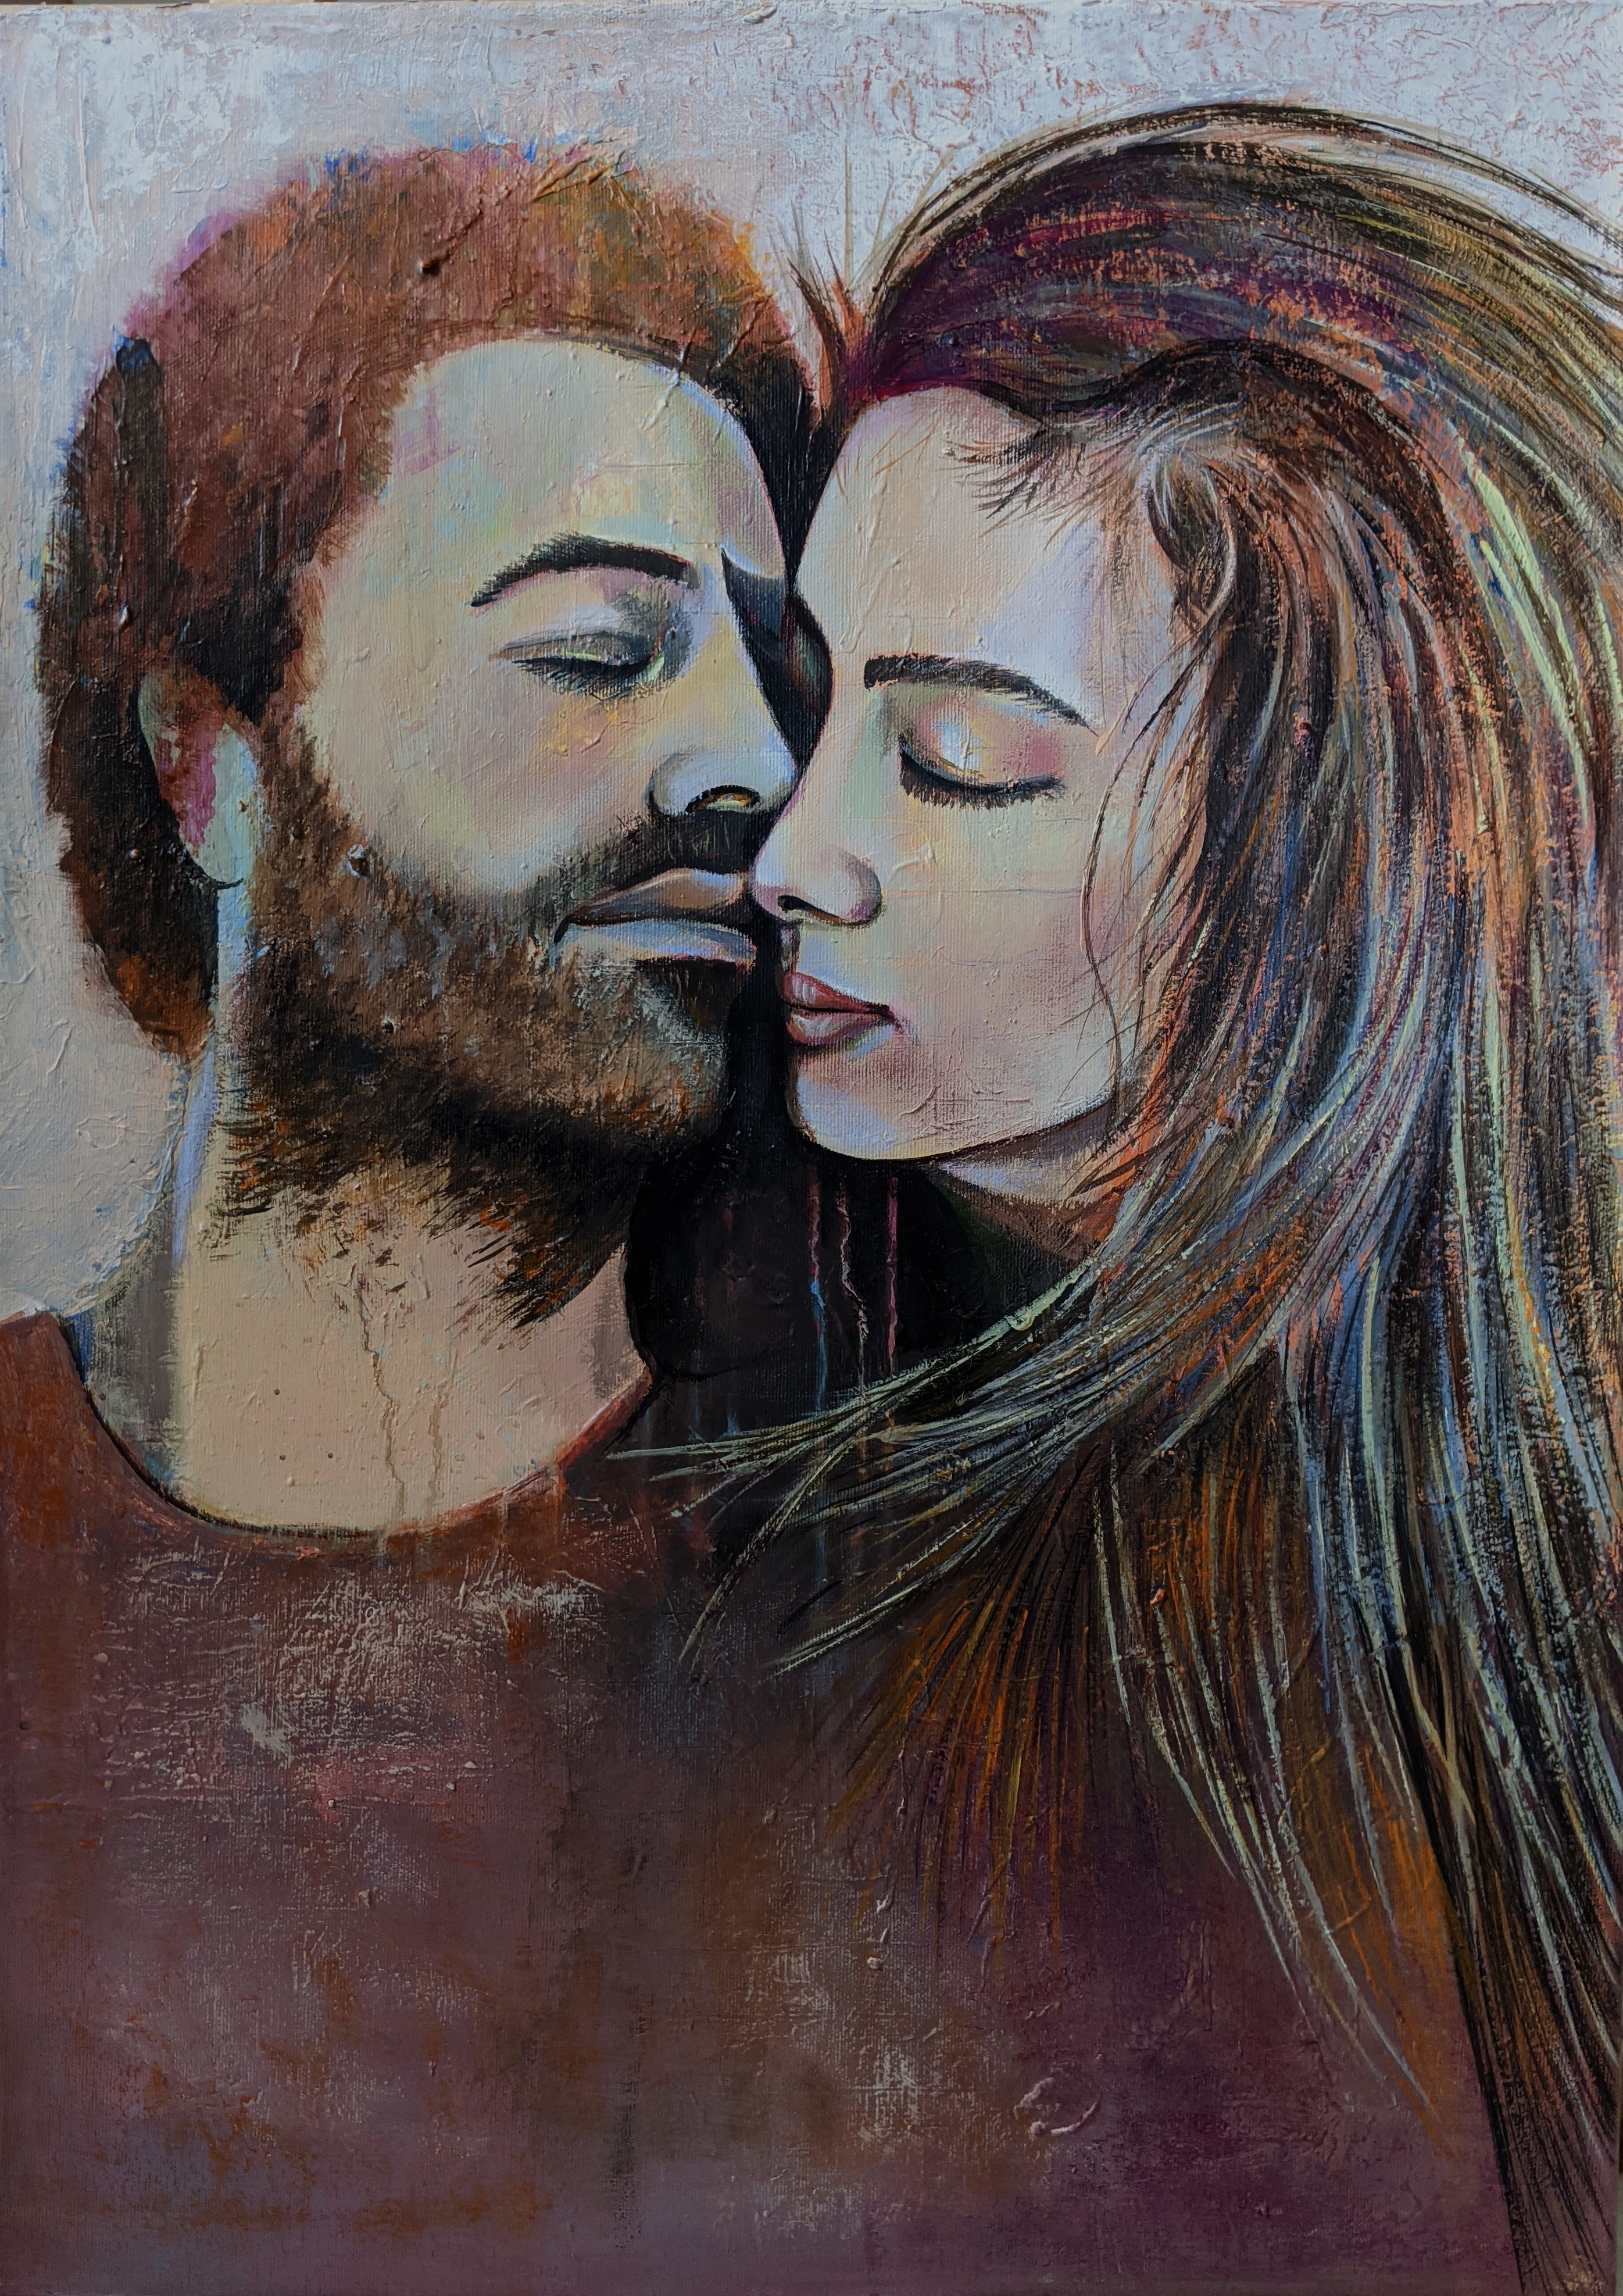 February lovers 2020-2021
Acrylics on canvas 
50*70